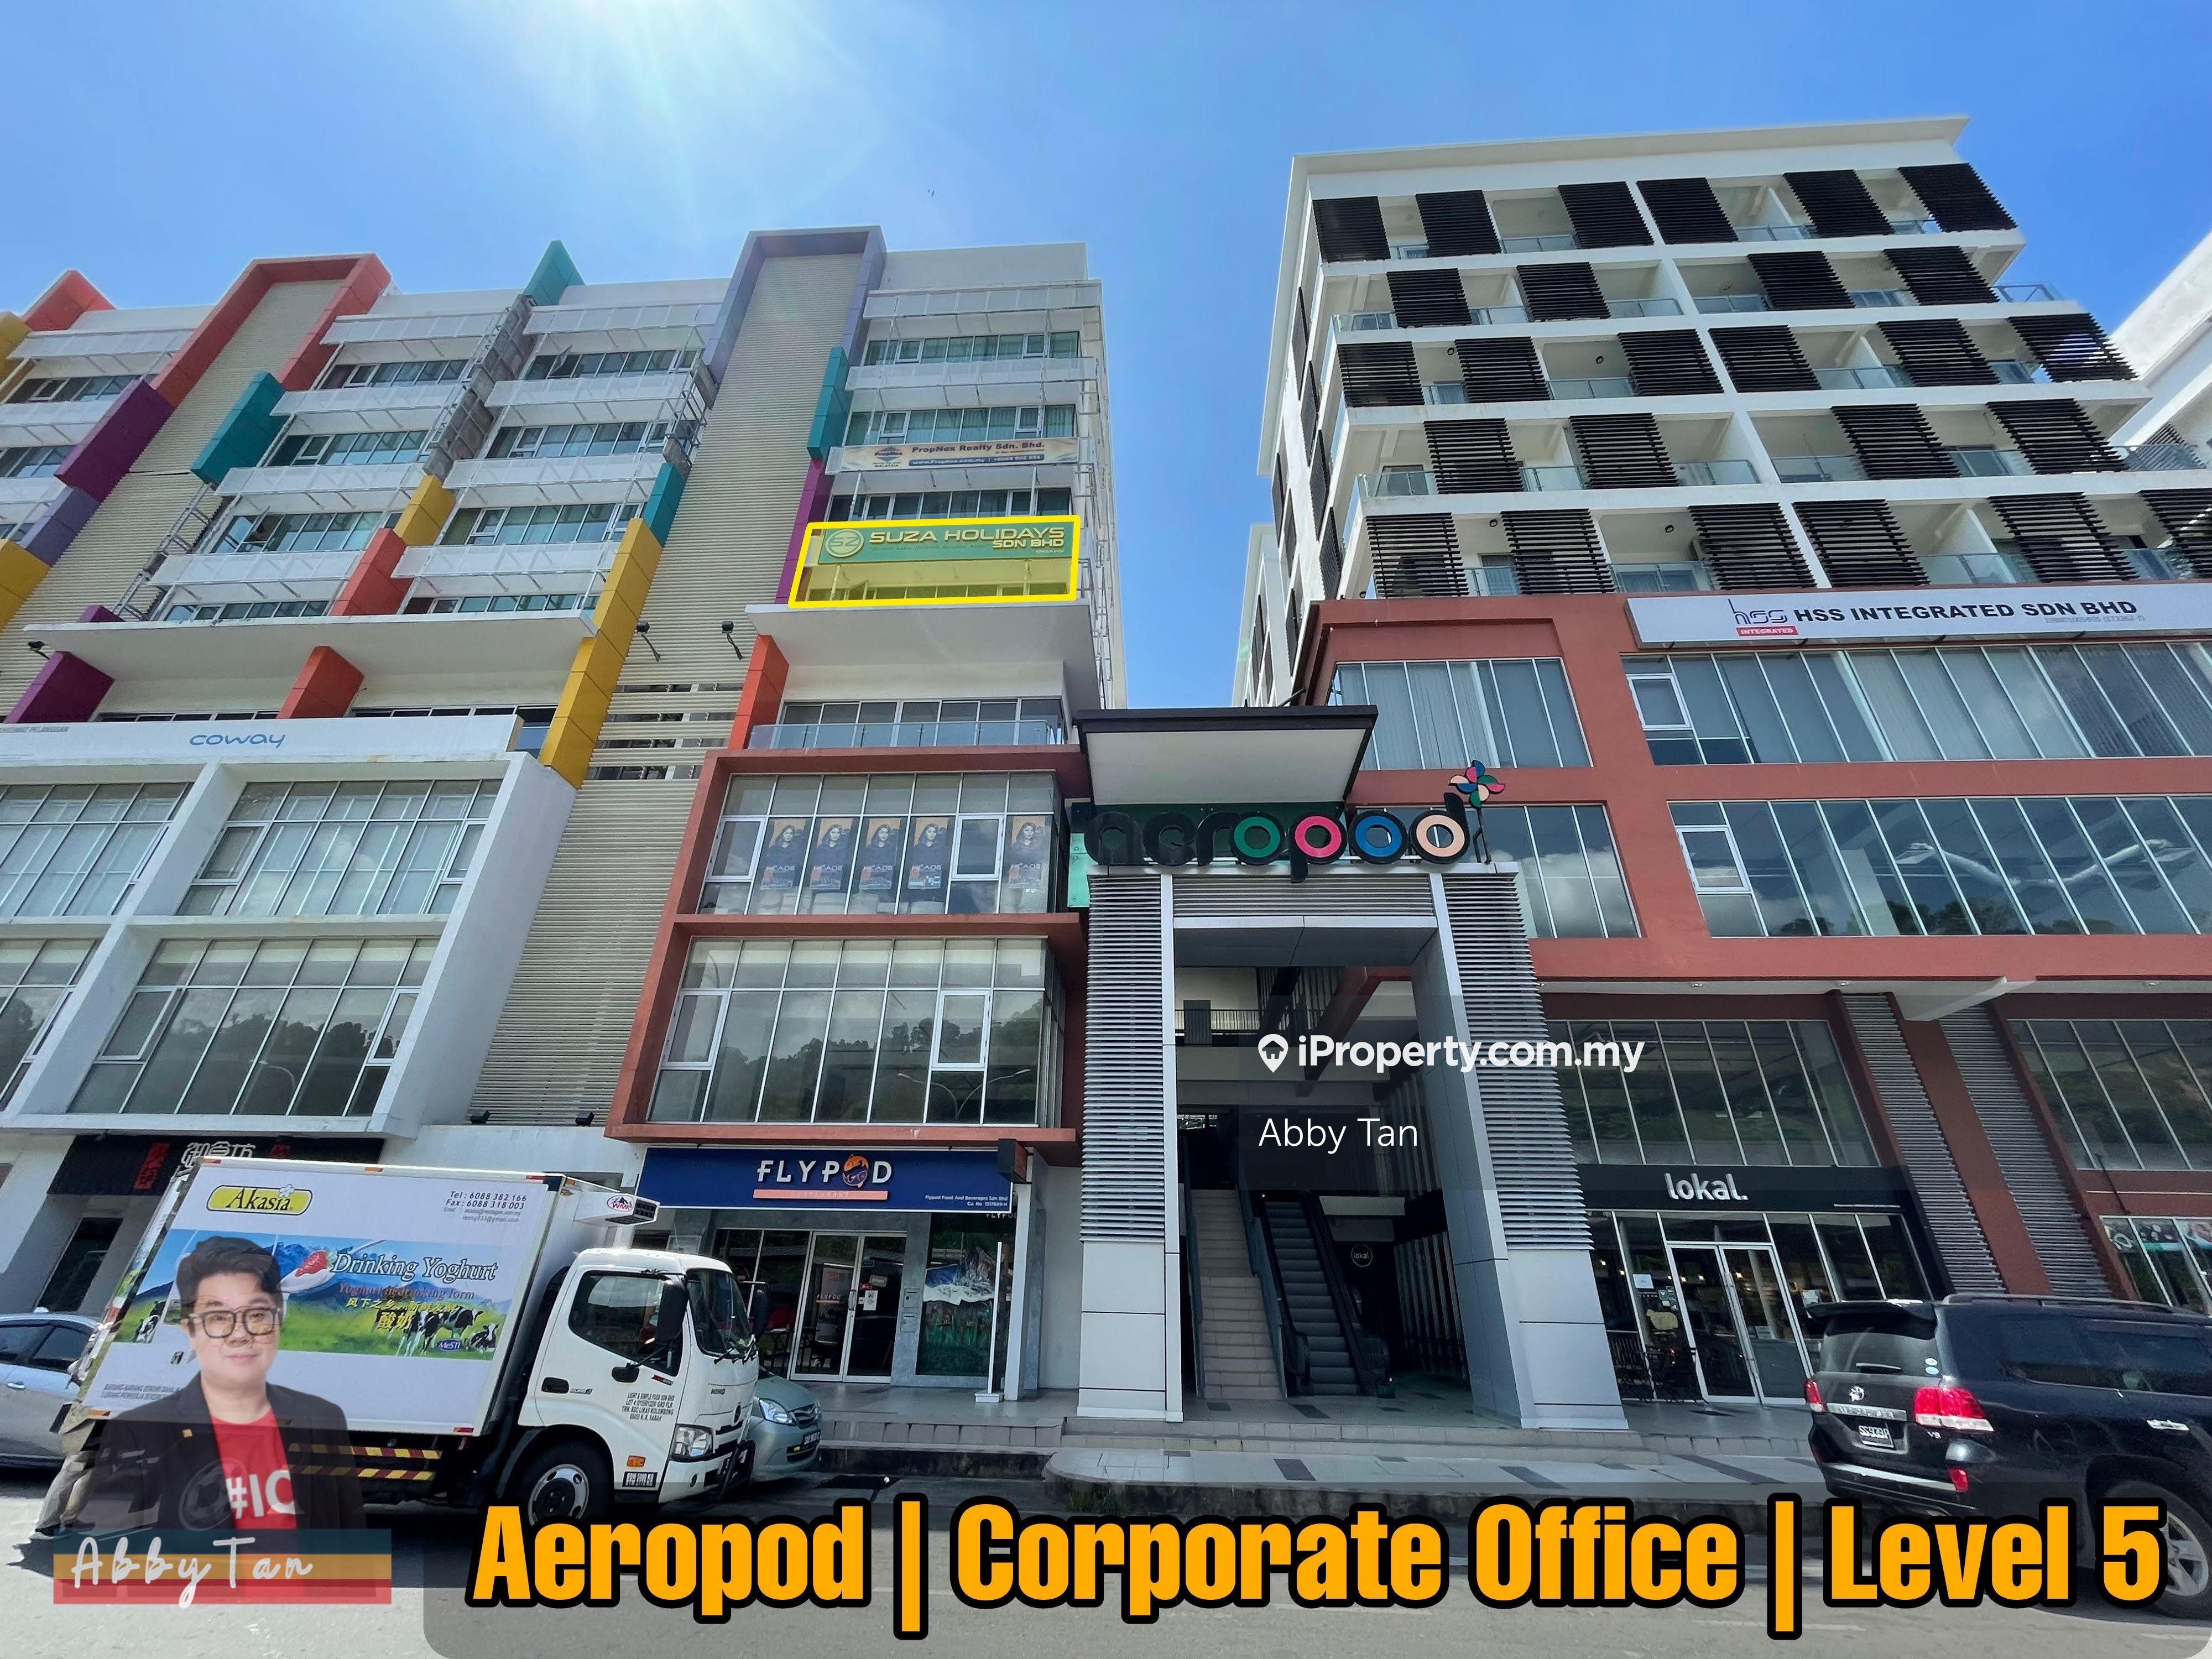 For Sale Aeropod Office Tanjung Aru Kota Kinabalu Kota Kinabalu Intermediate Office For